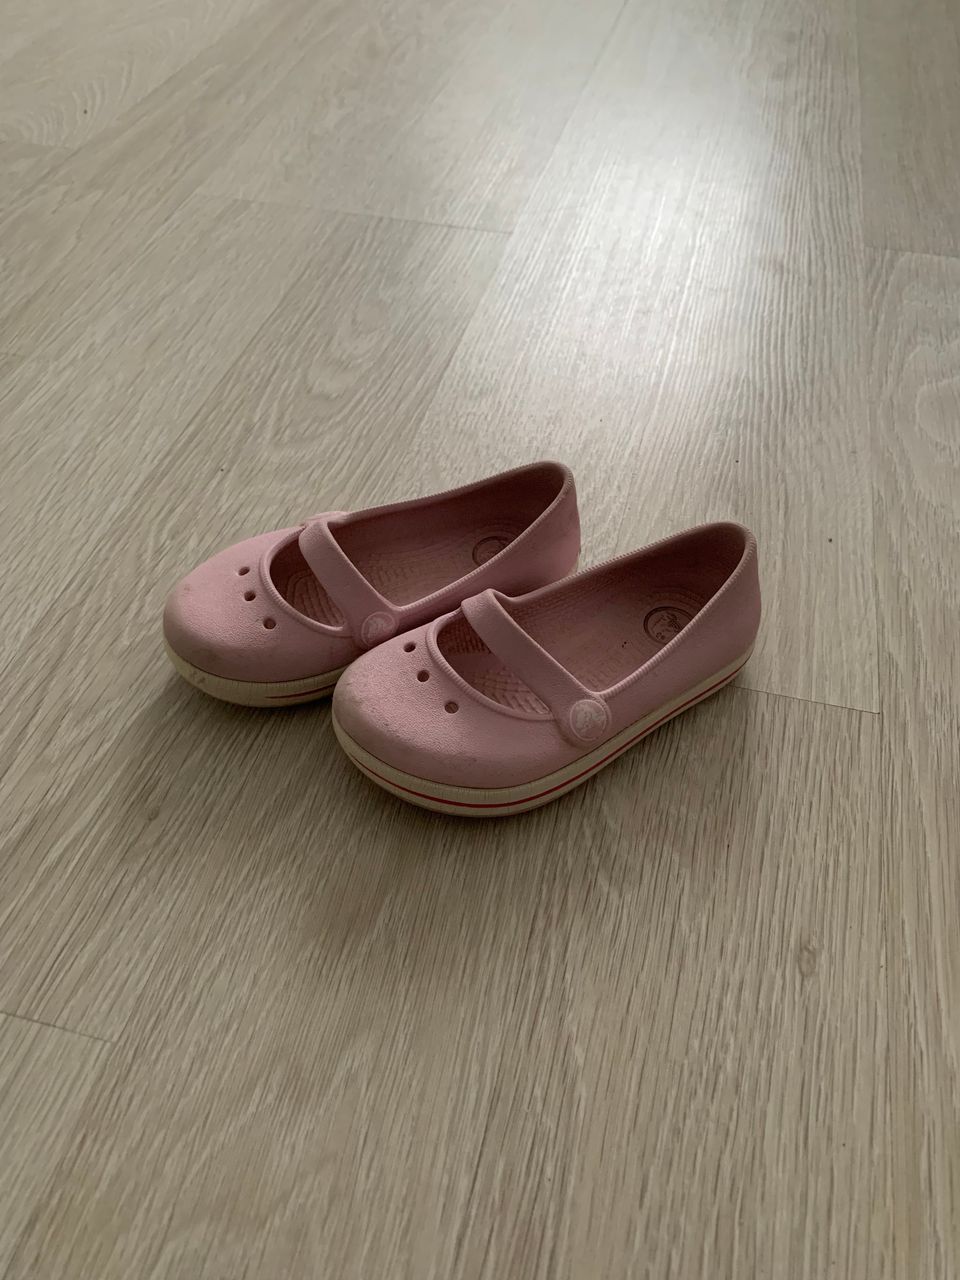 Crocs vaaleanpunaiset sandaalit / uimakengät / kengät, koko 22